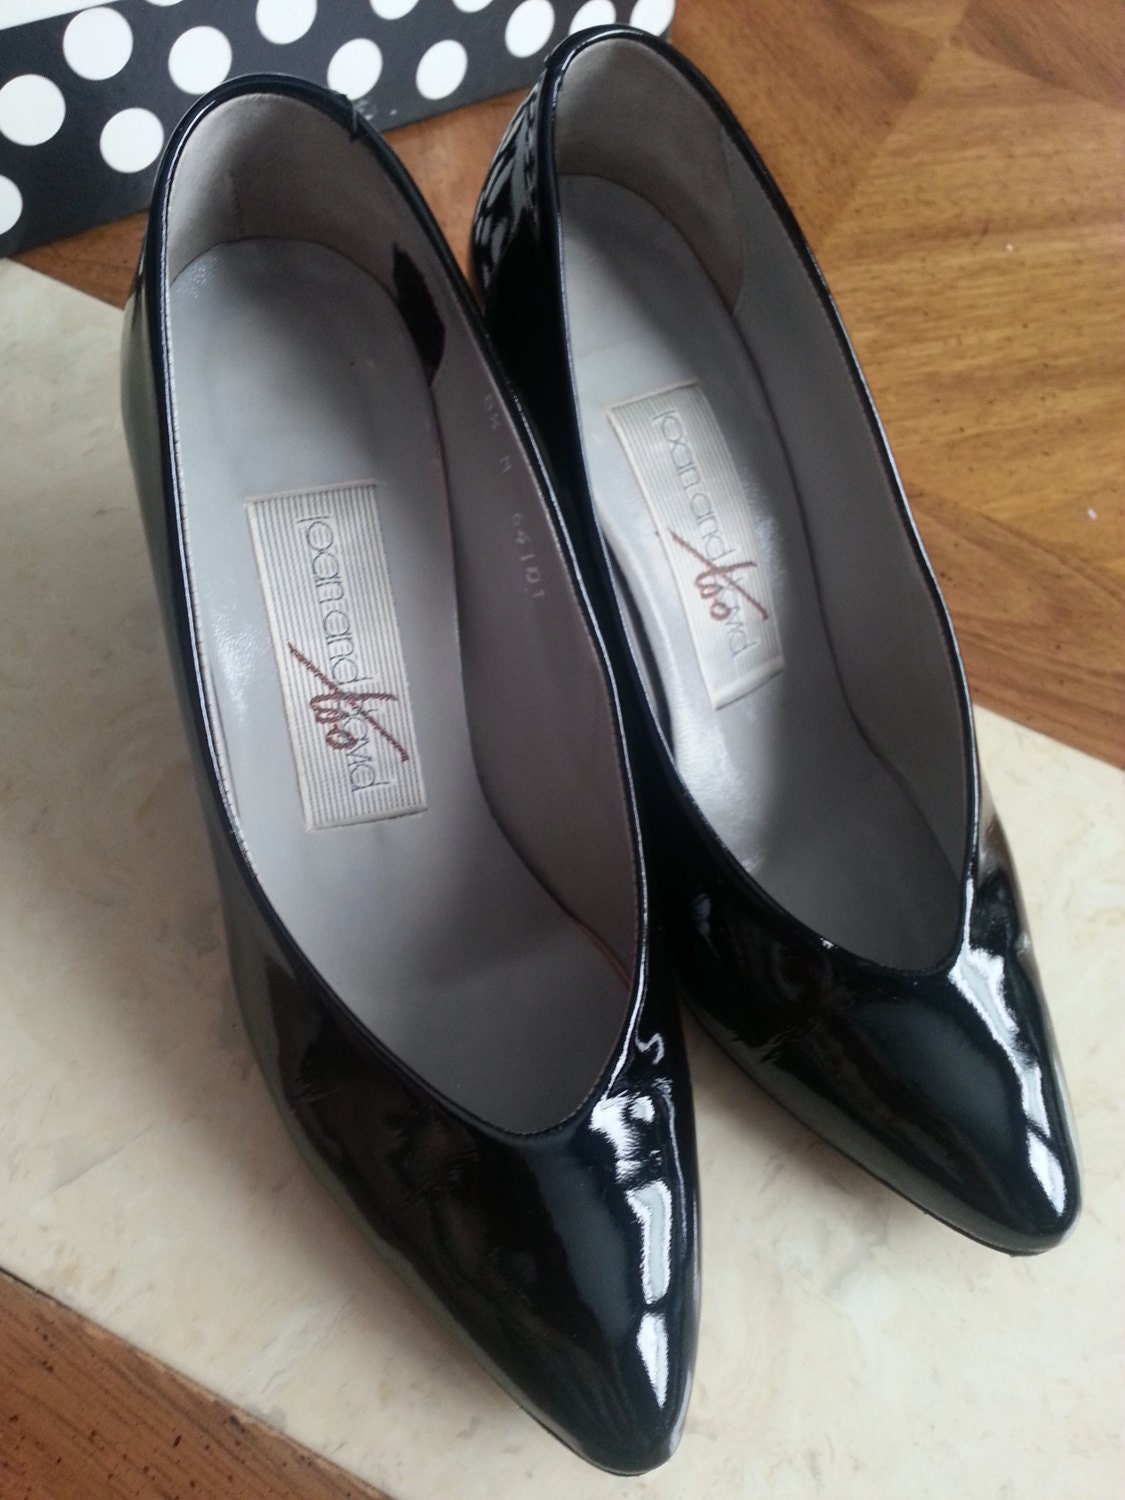 Vintage Joan and David Too Heels Pumps Shoes Black Patent